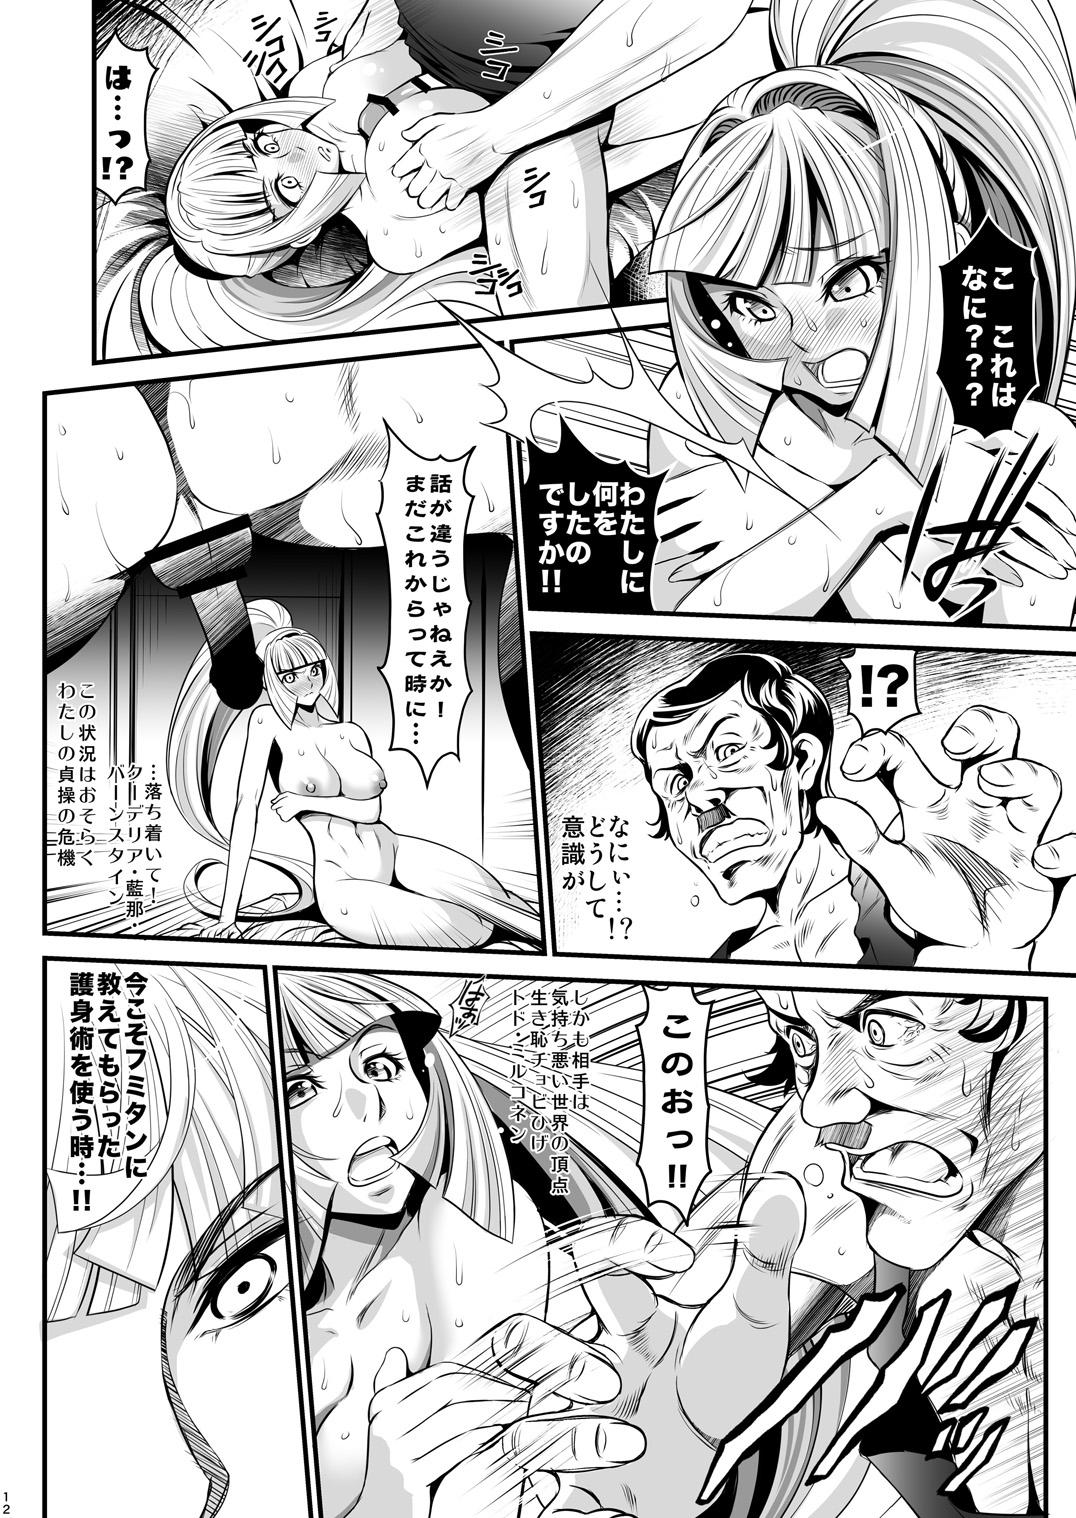 Thief Chobihige Yobai - Mobile suit gundam tekketsu no orphans Amateur Porno - Page 12